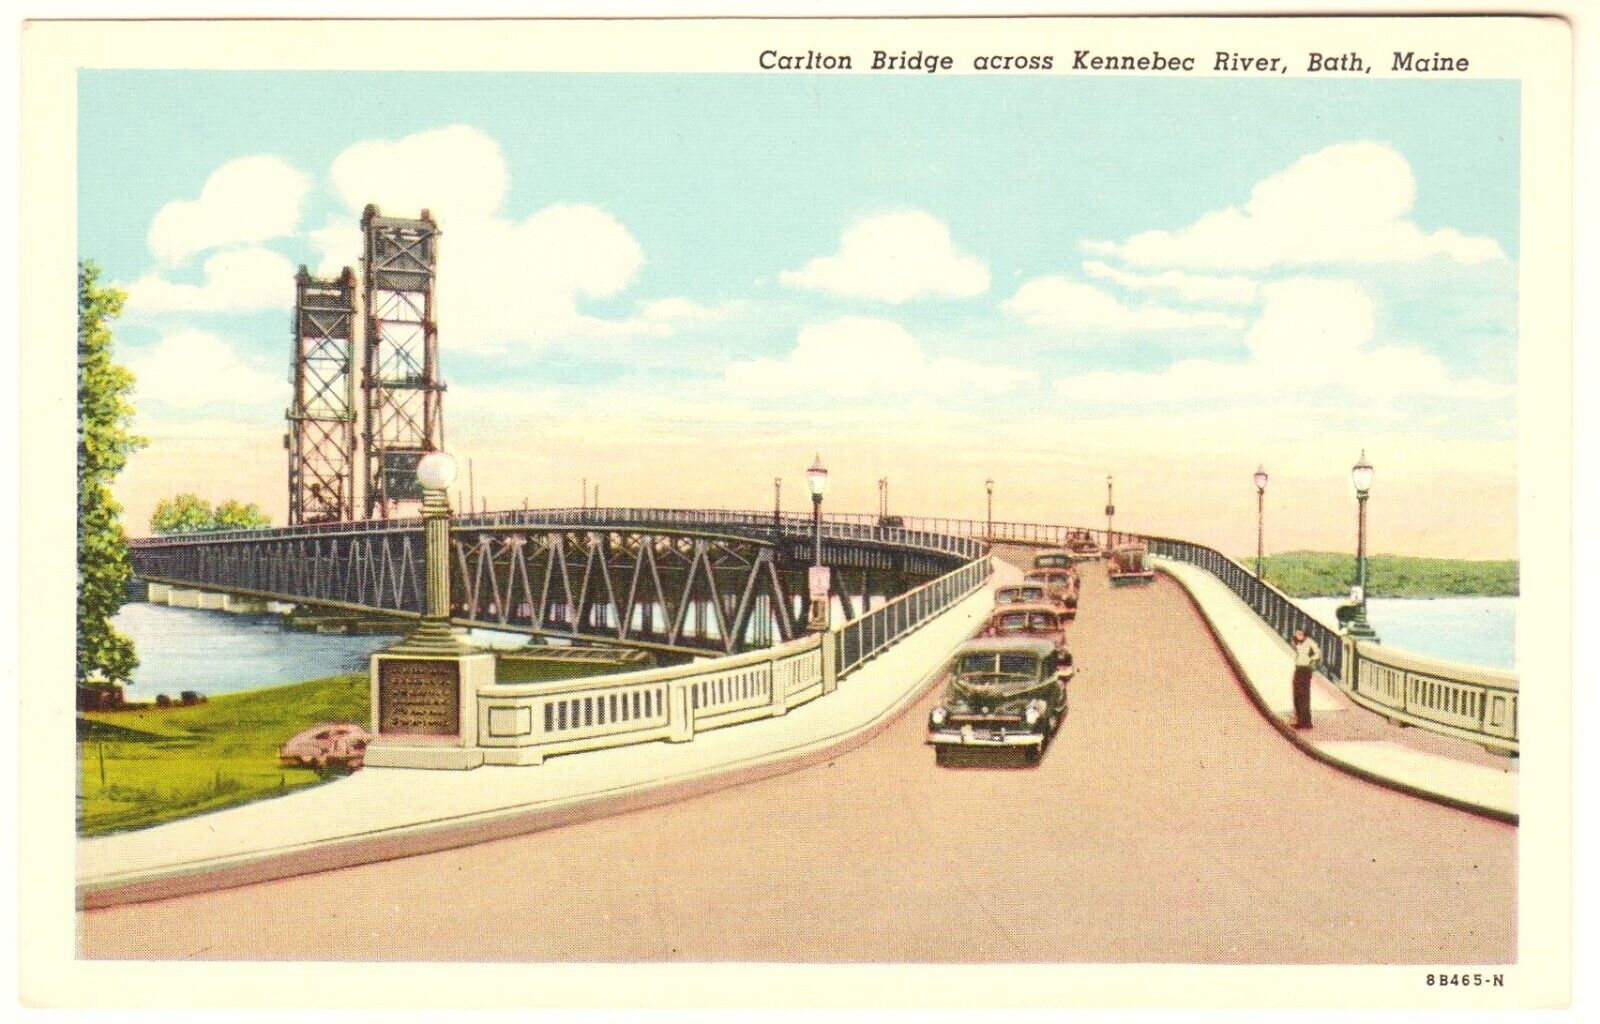 CARLTON BRIDGE across KENNEBEC RIVER, BATH, MAINE - 1948 Linen Postcard